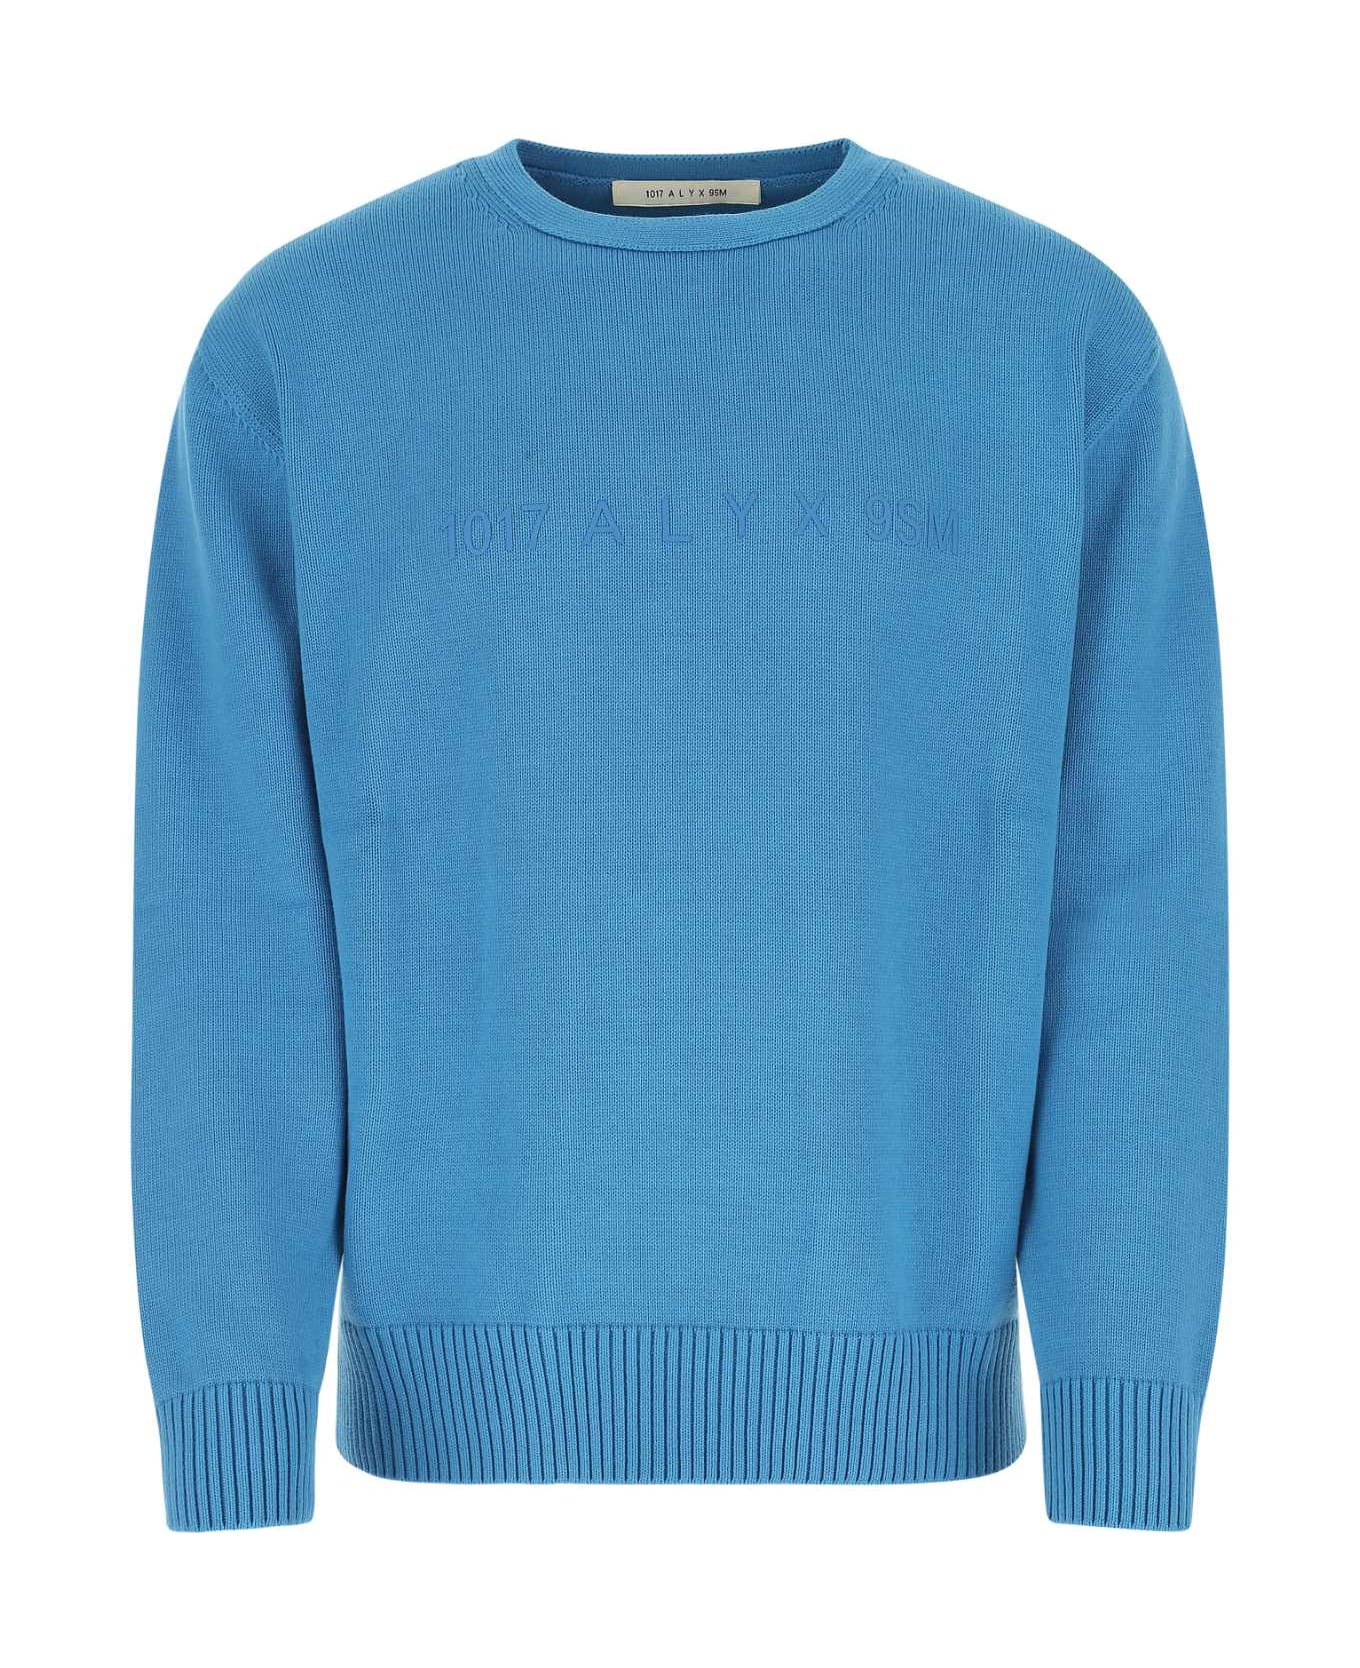 1017 ALYX 9SM Turquoise Cotton Sweater - BLU0001 ニットウェア